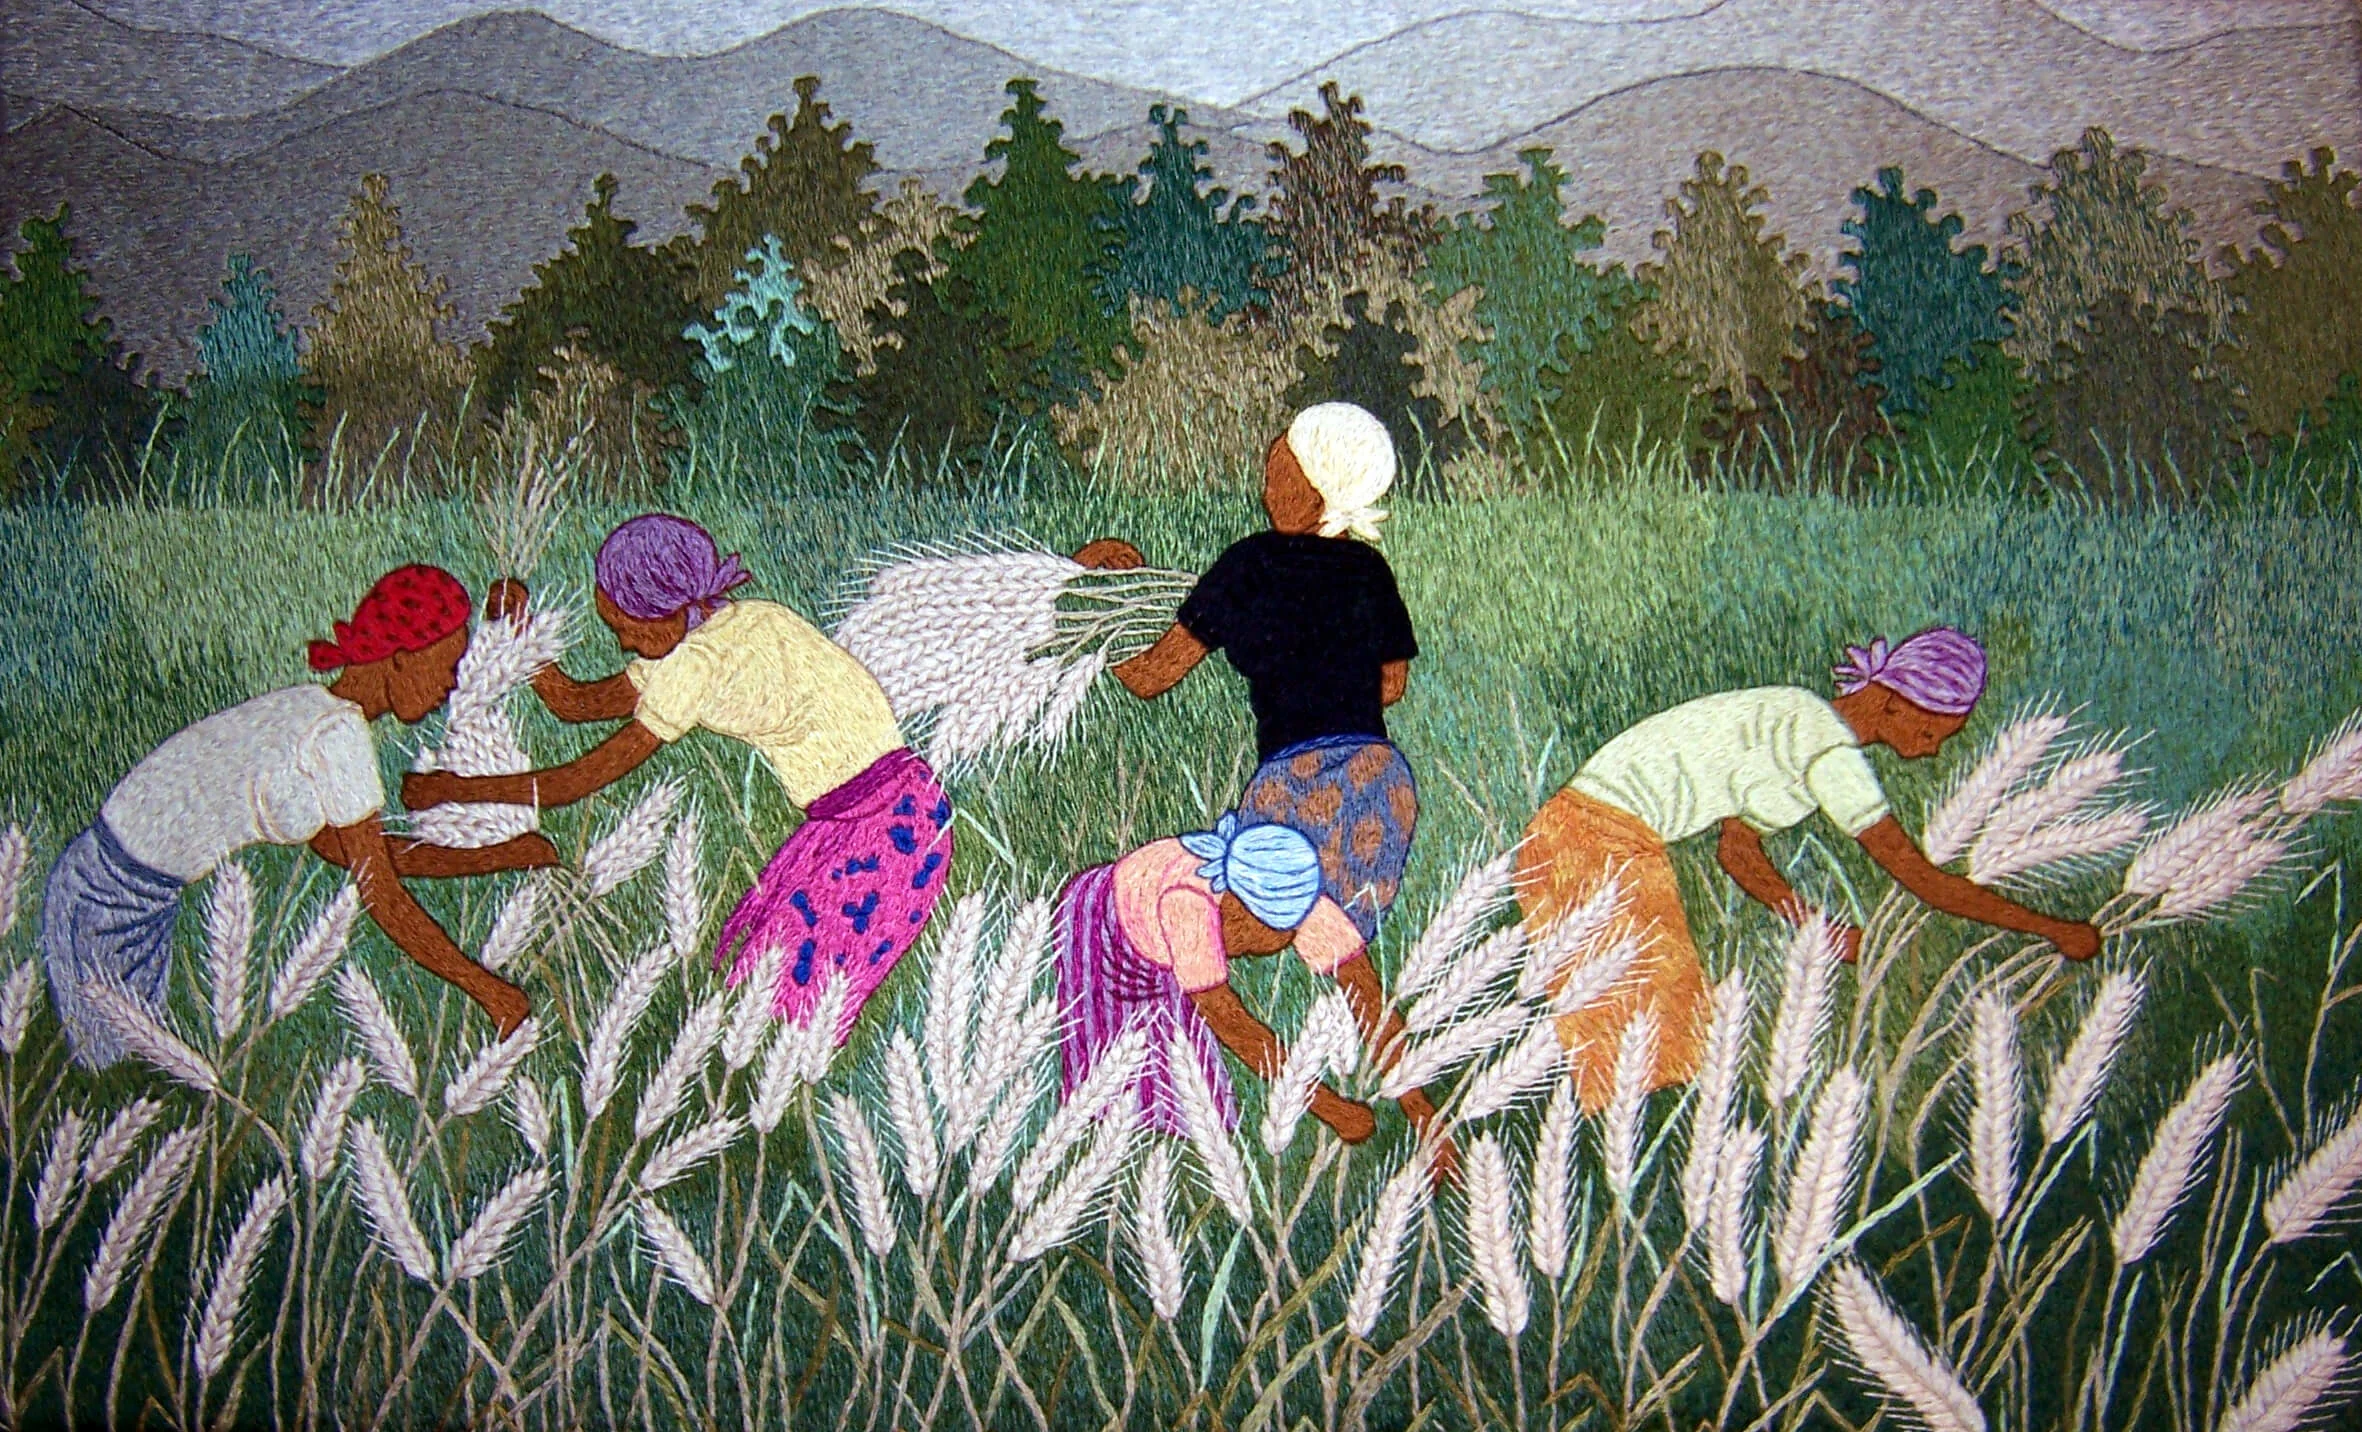 Wheat harvesters